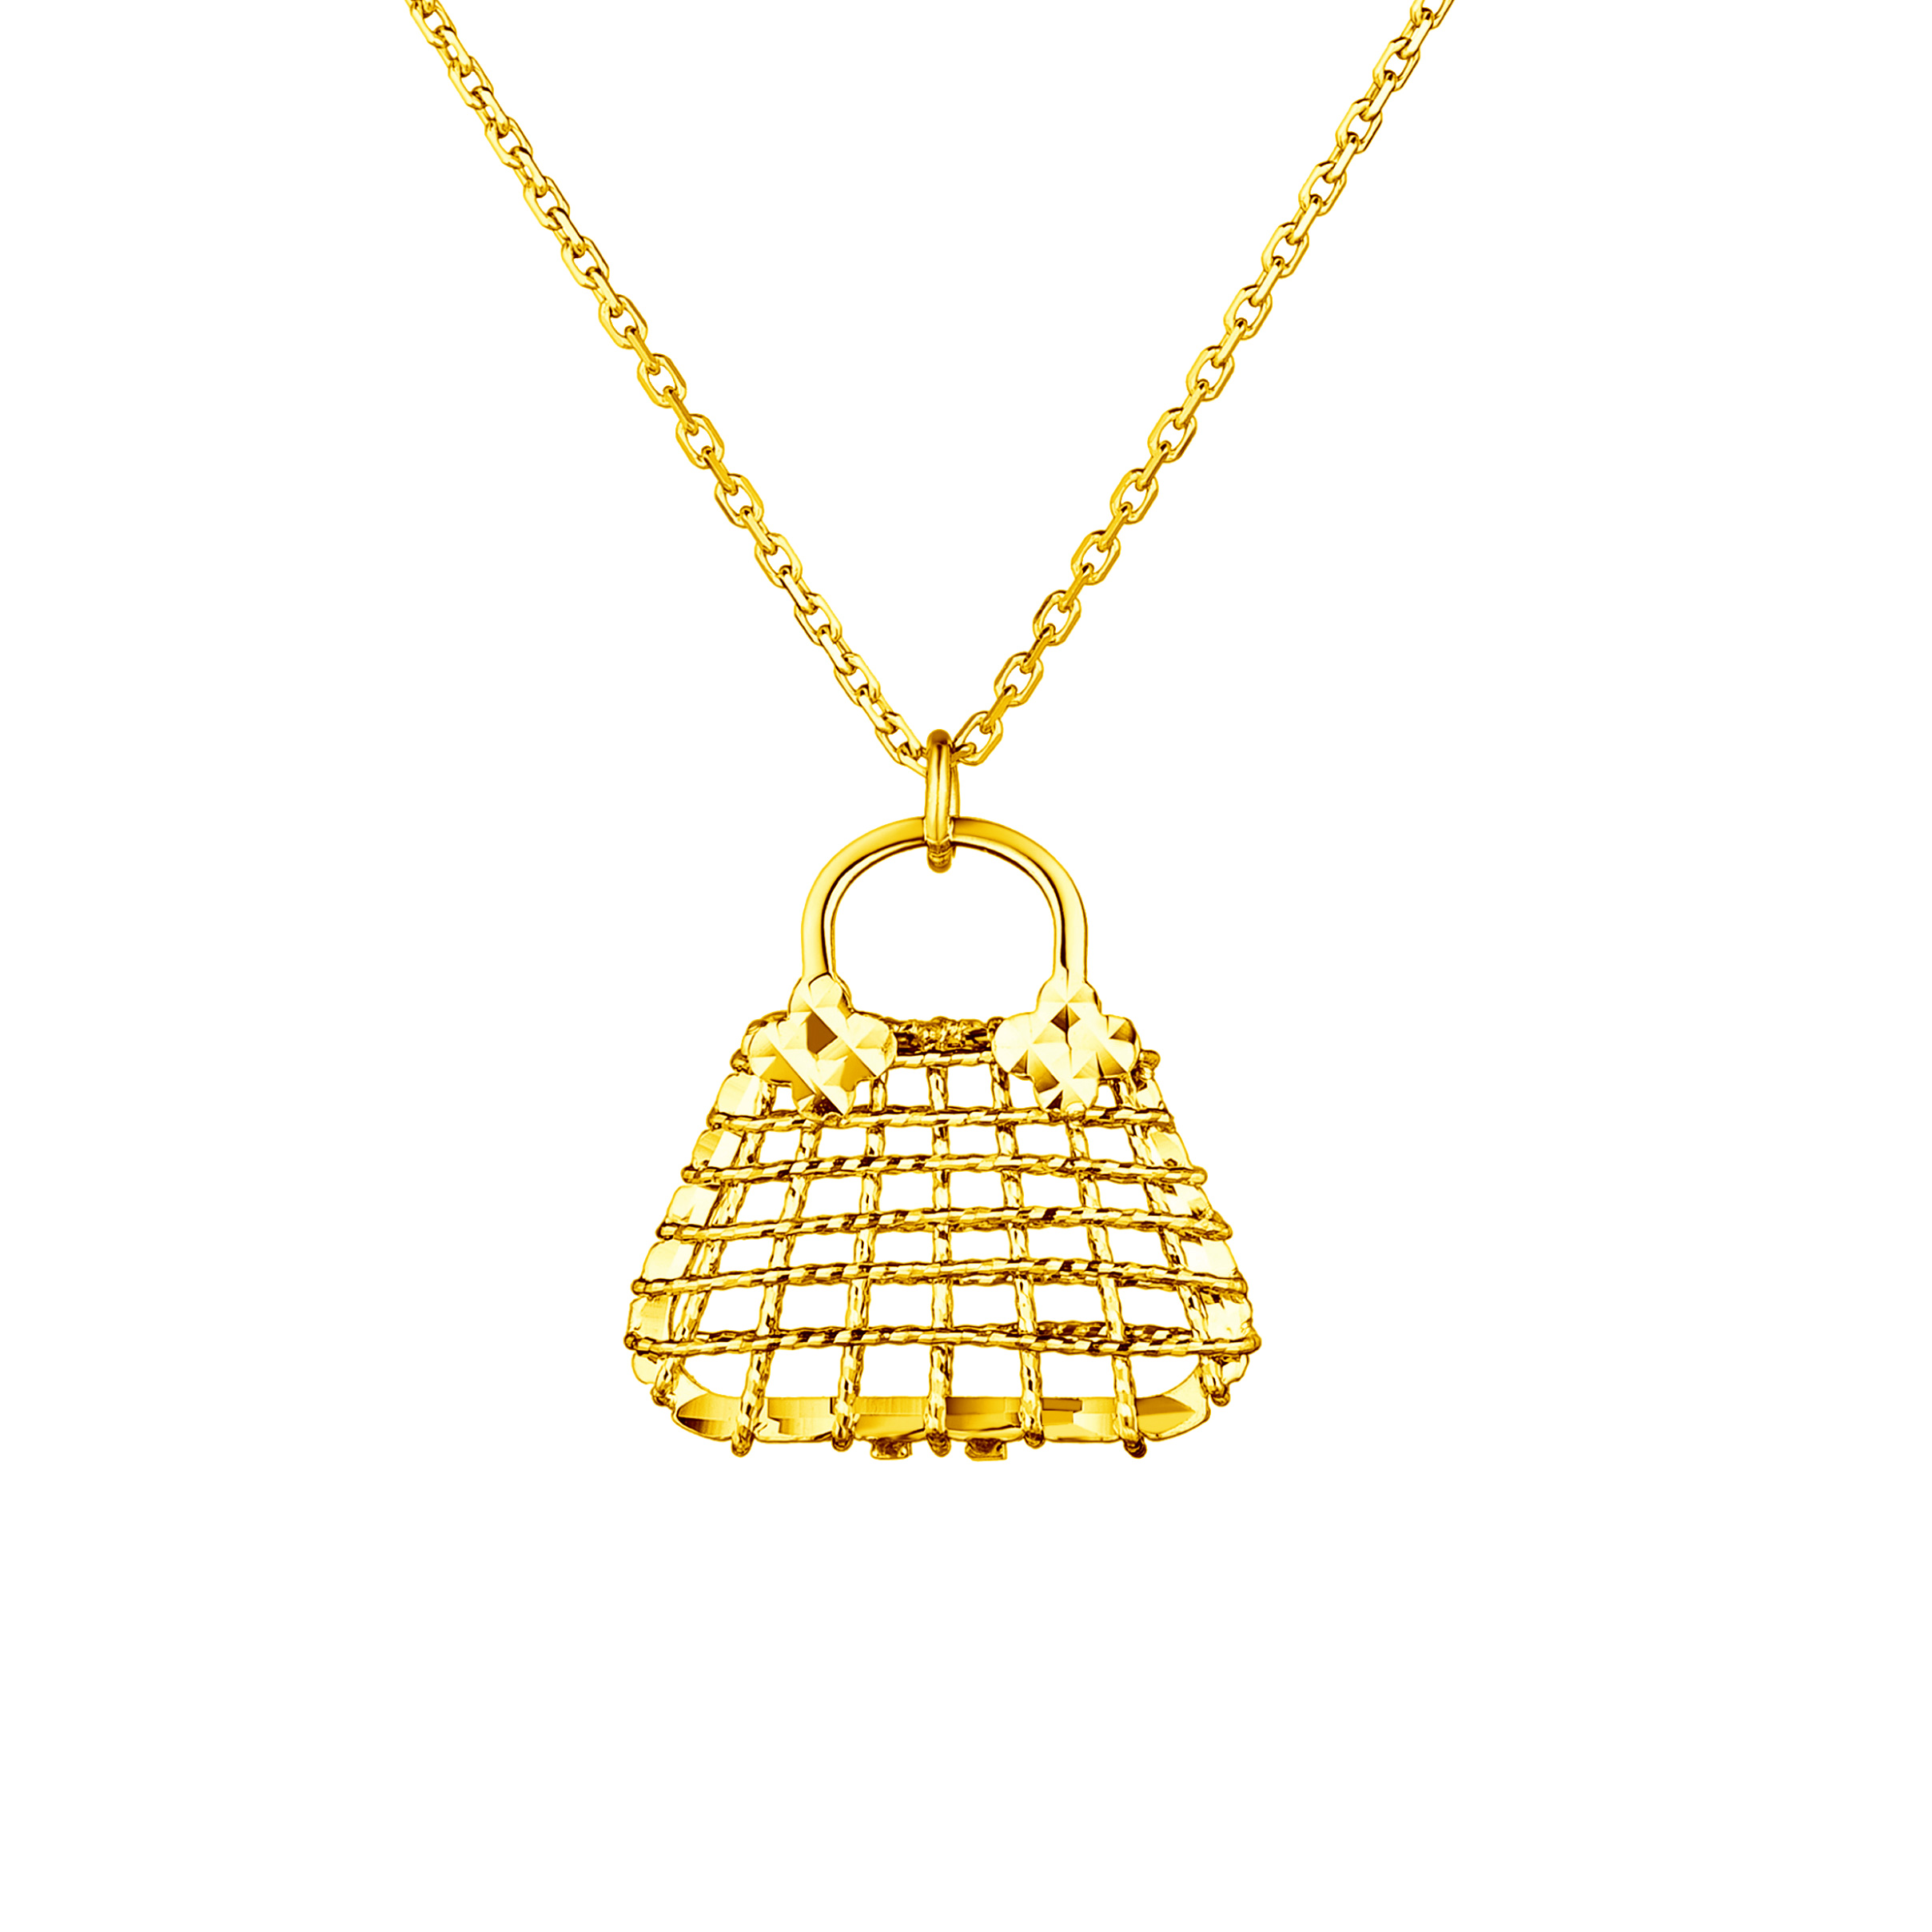 Goldstyle "Fashion Handbag" Gold Necklace